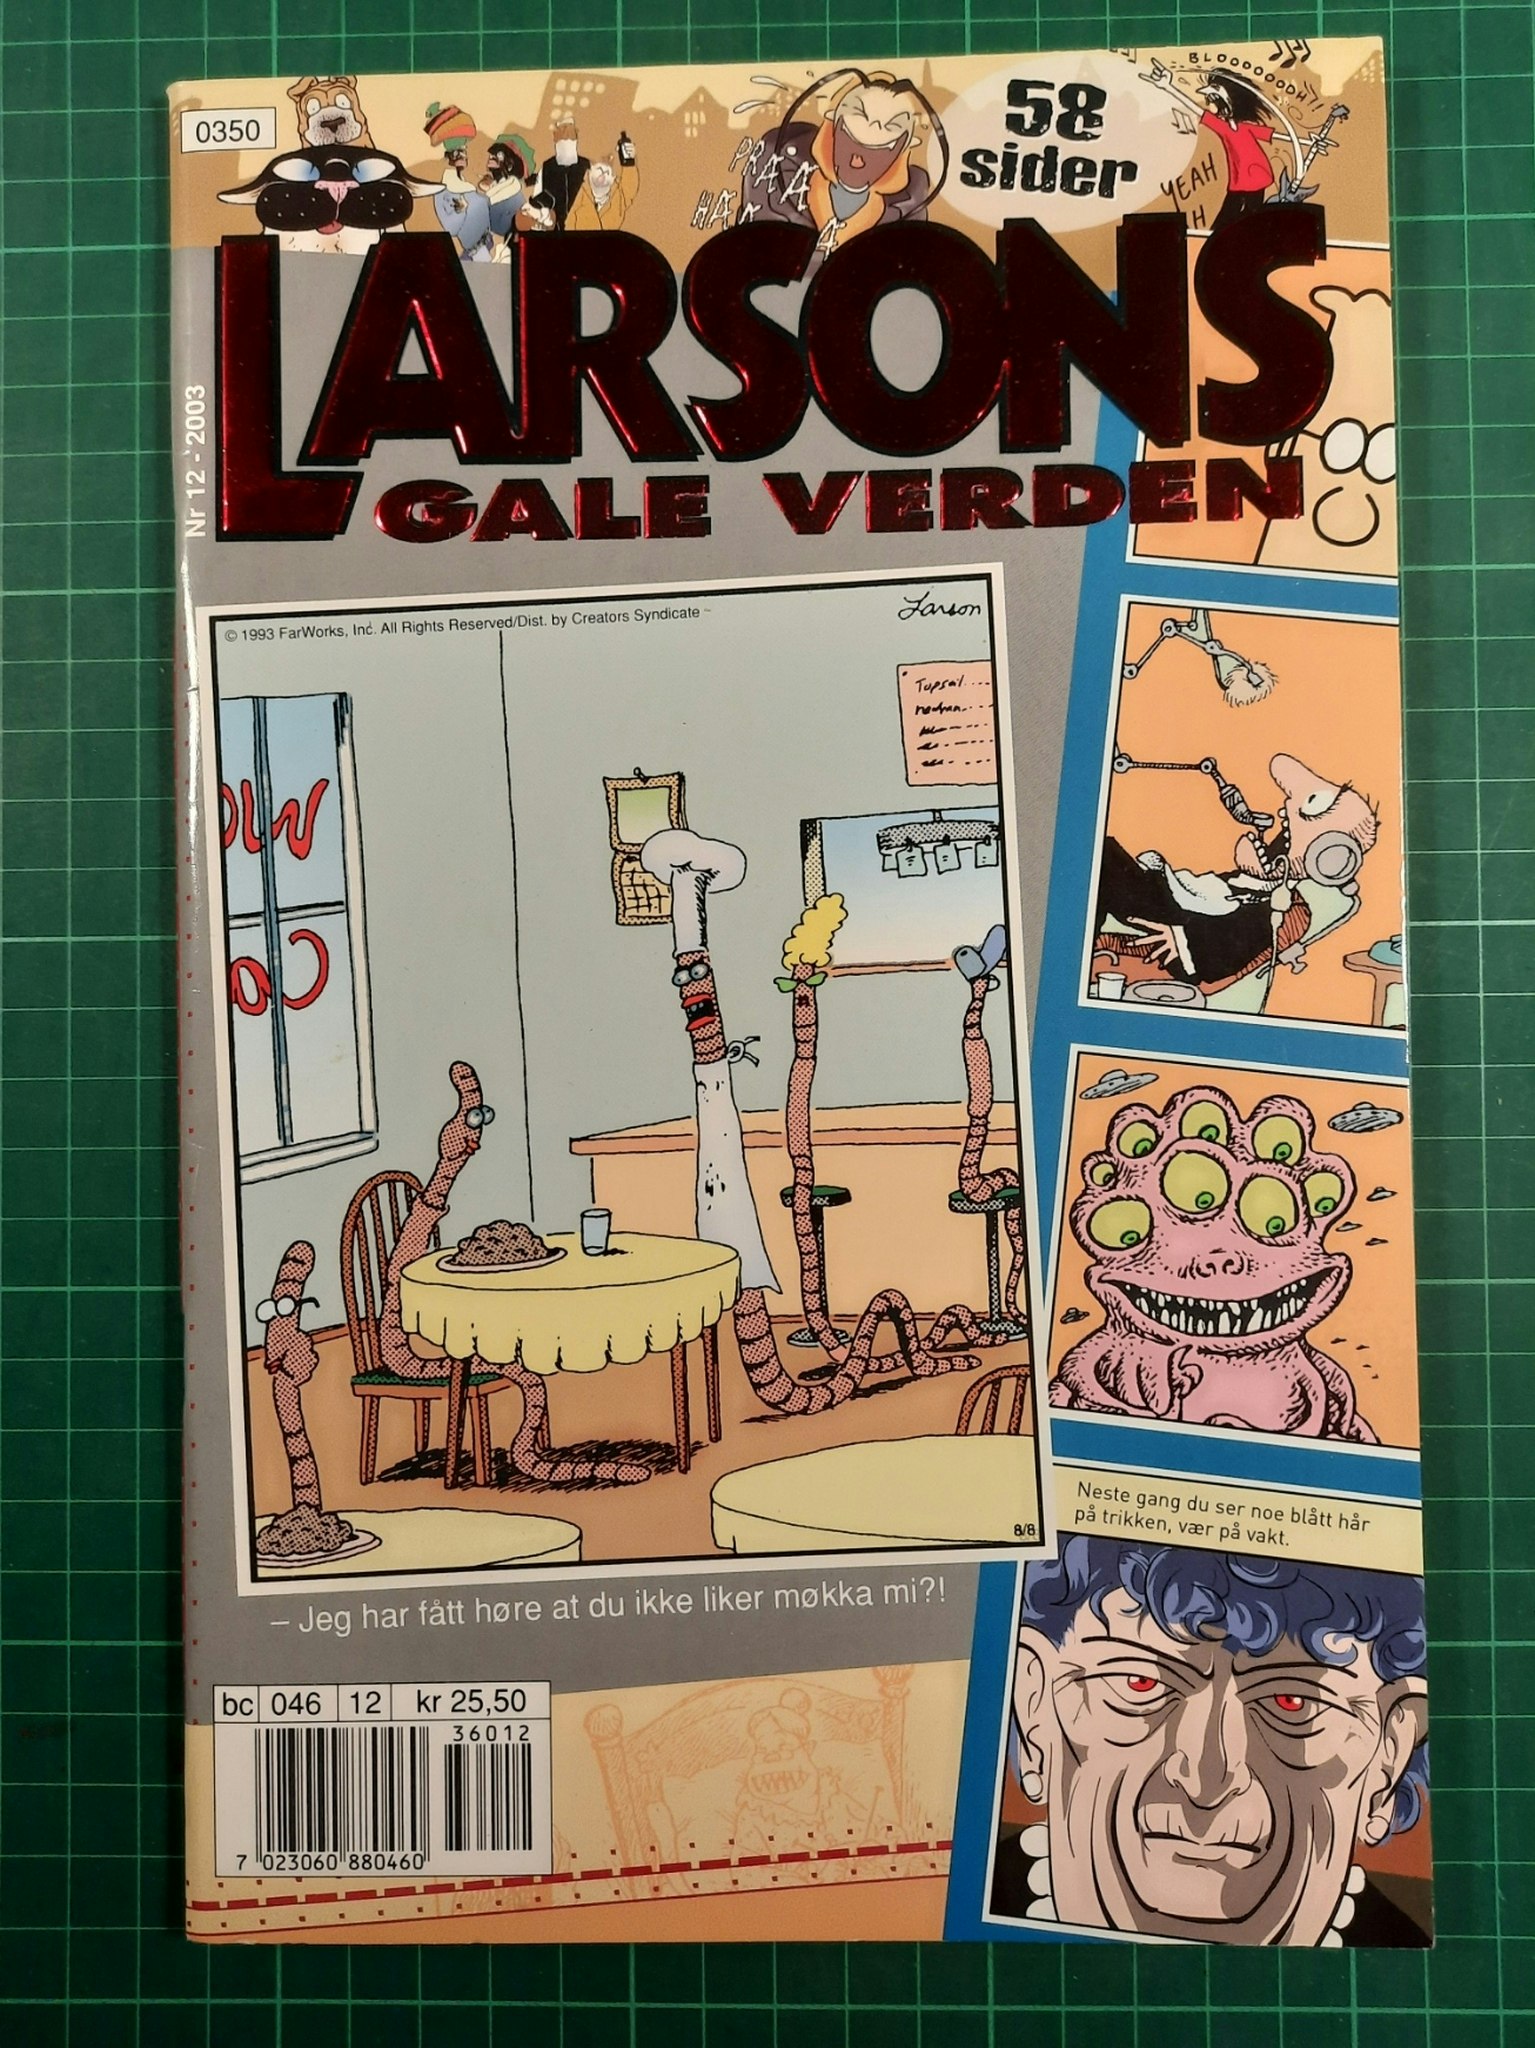 Larsons gale verden 2003 - 12